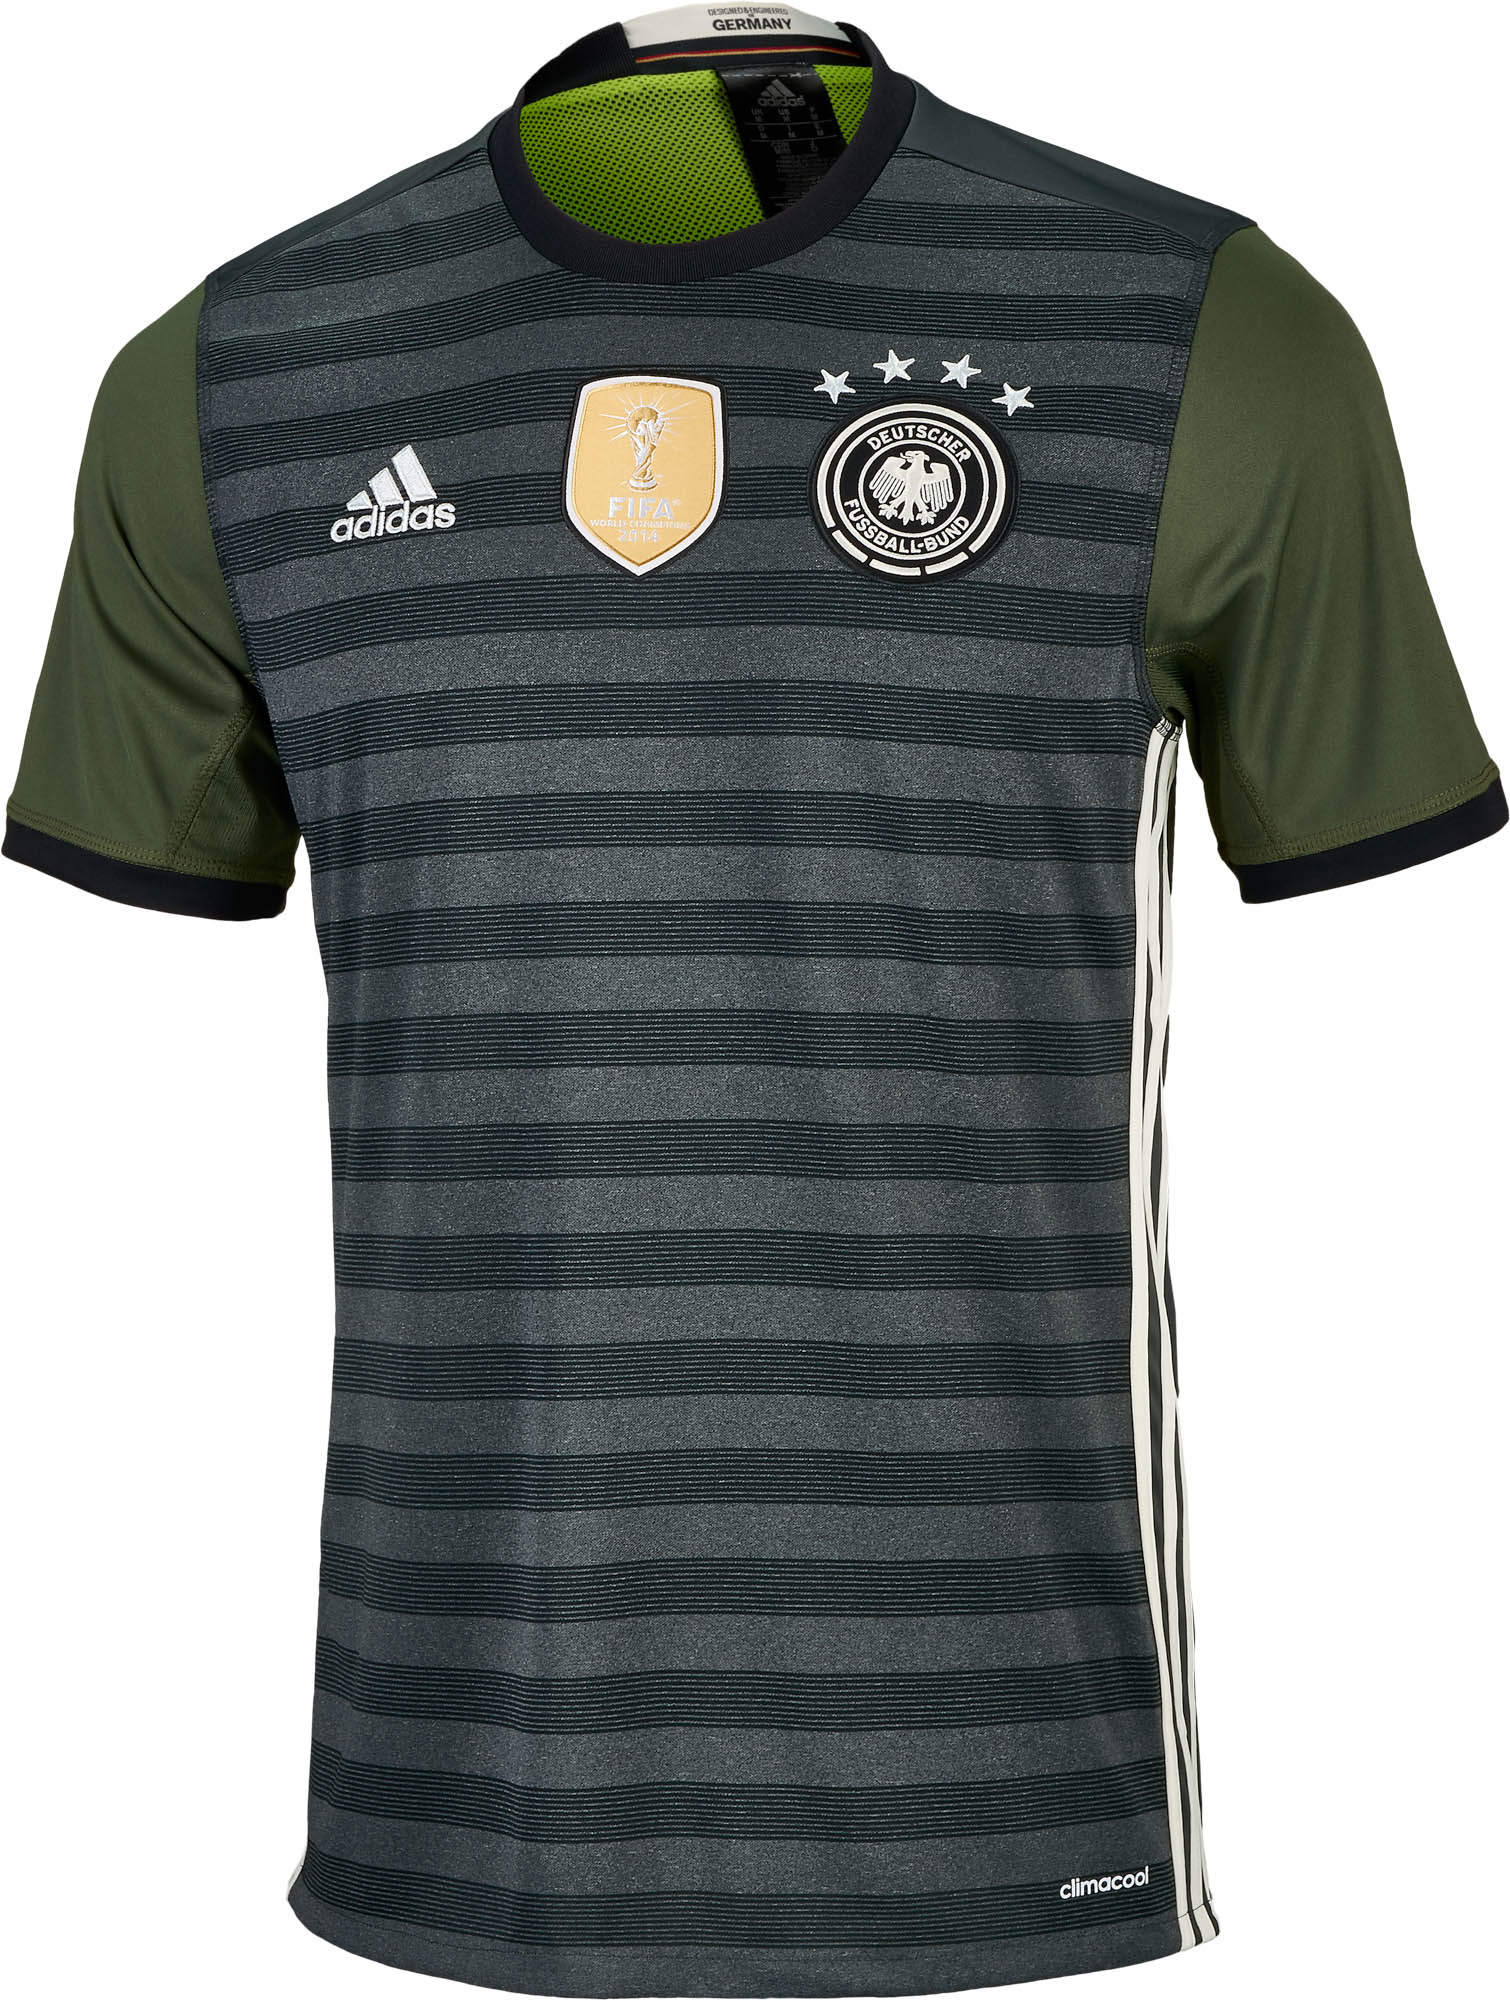 adidas germany soccer jersey